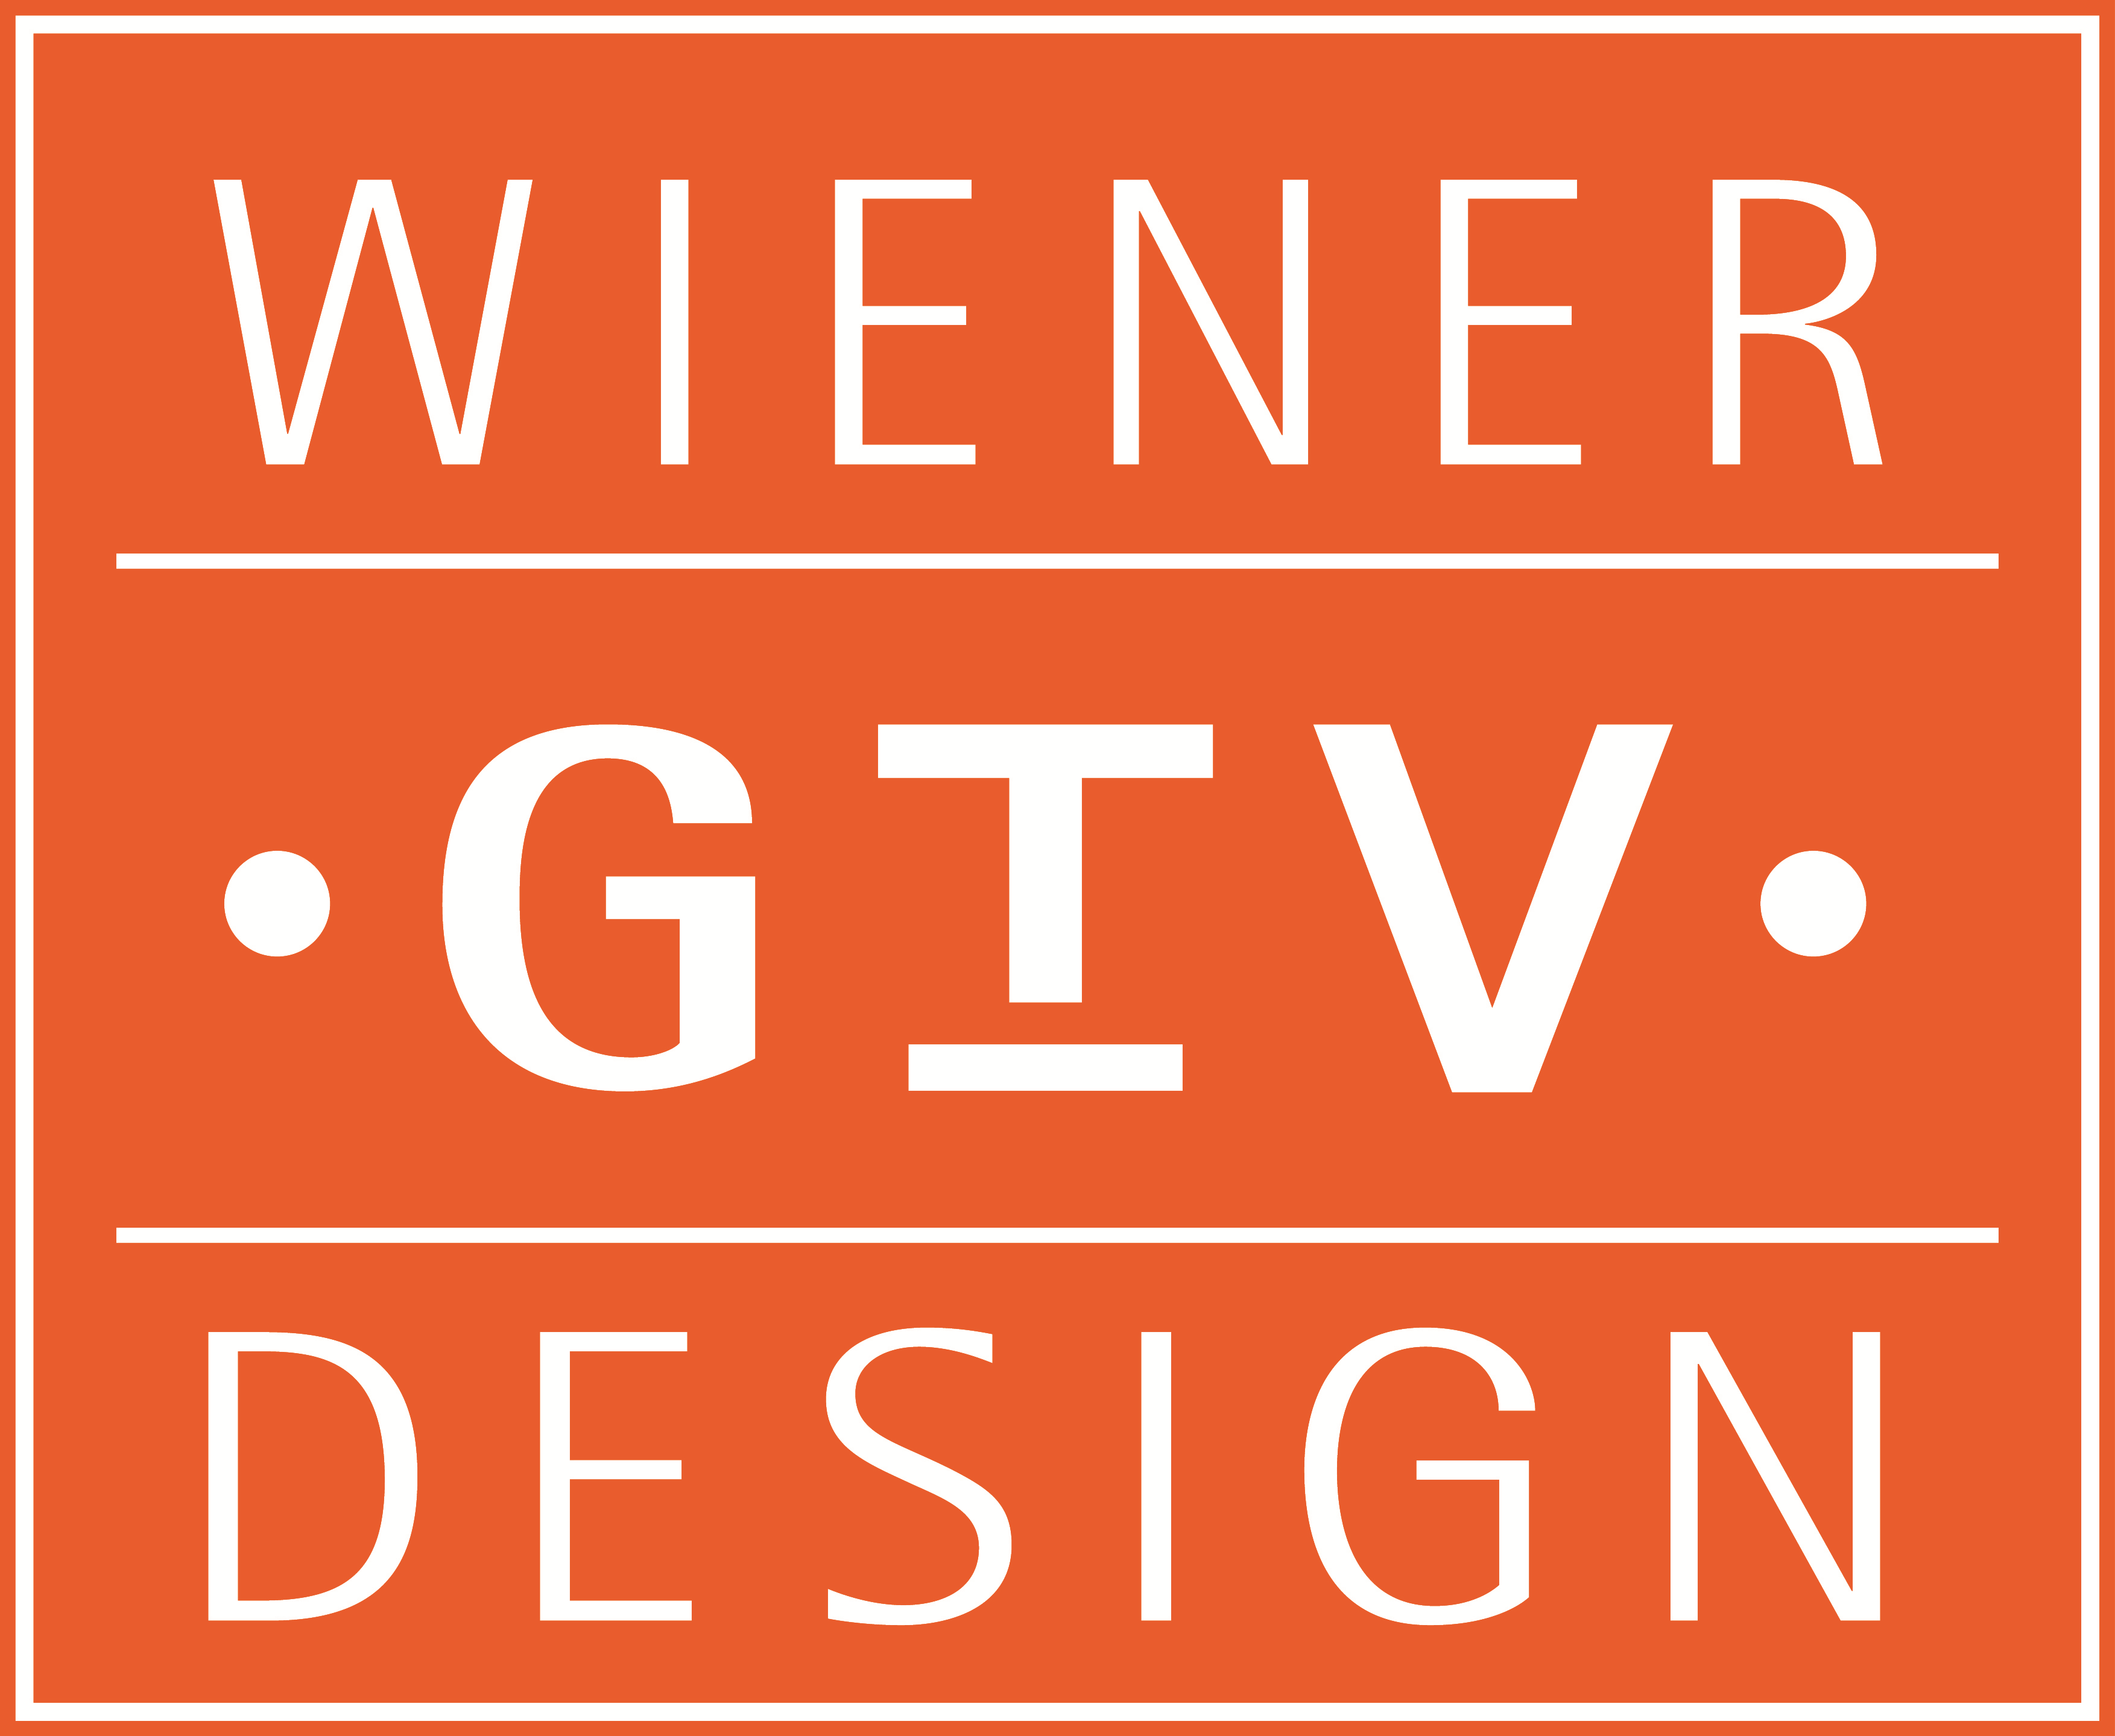 GTV Logo - Wiener GTV Design. Curved wood furniture